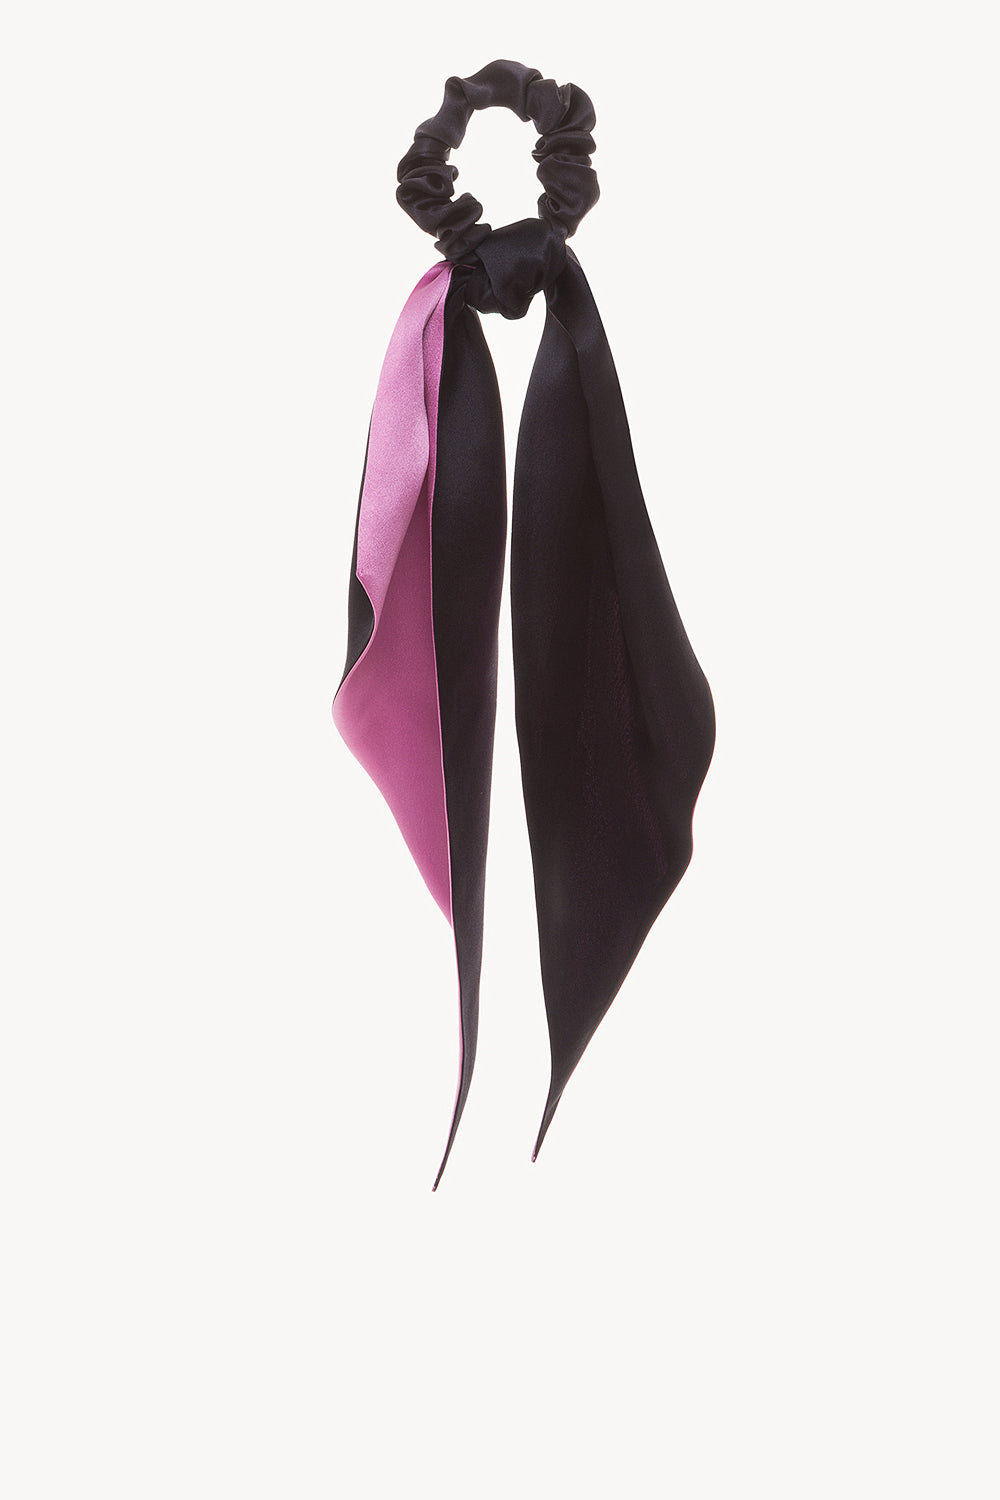 Silk scrunchie with scarf-like trims in fuchsia/navy